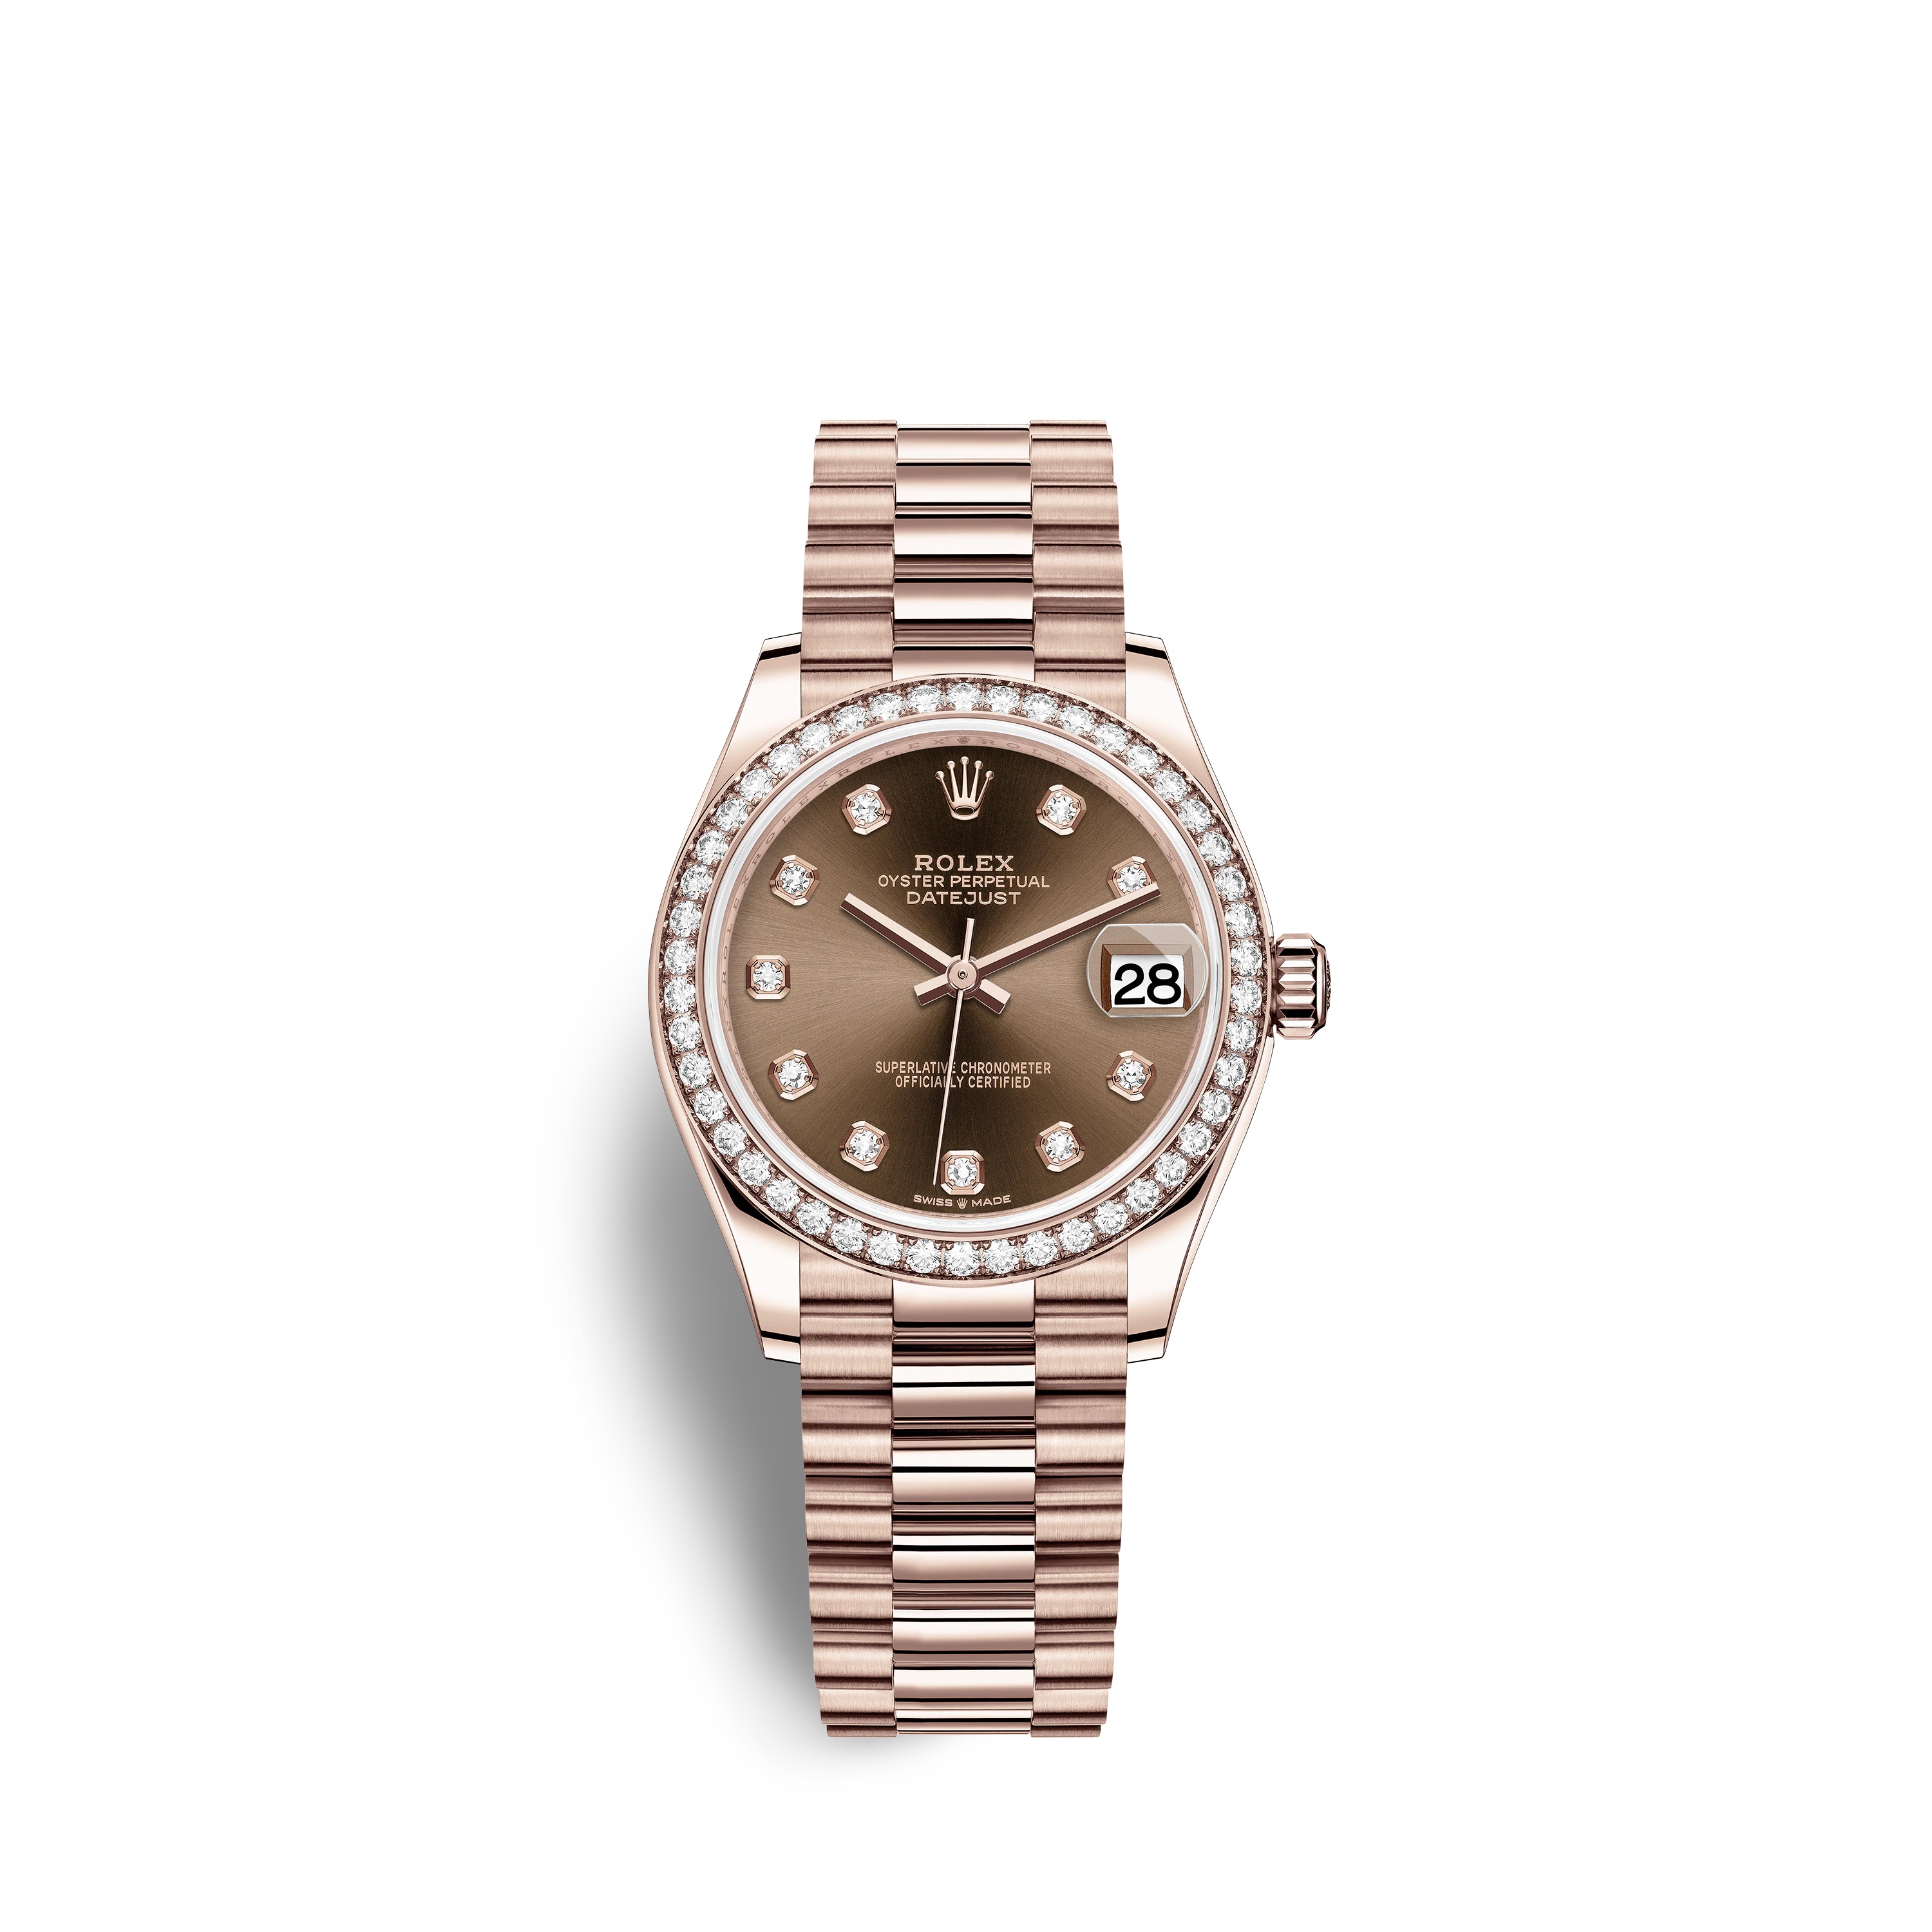 Datejust 31 278285RBR Rose Gold Watch (Chocolate Set with Diamonds)